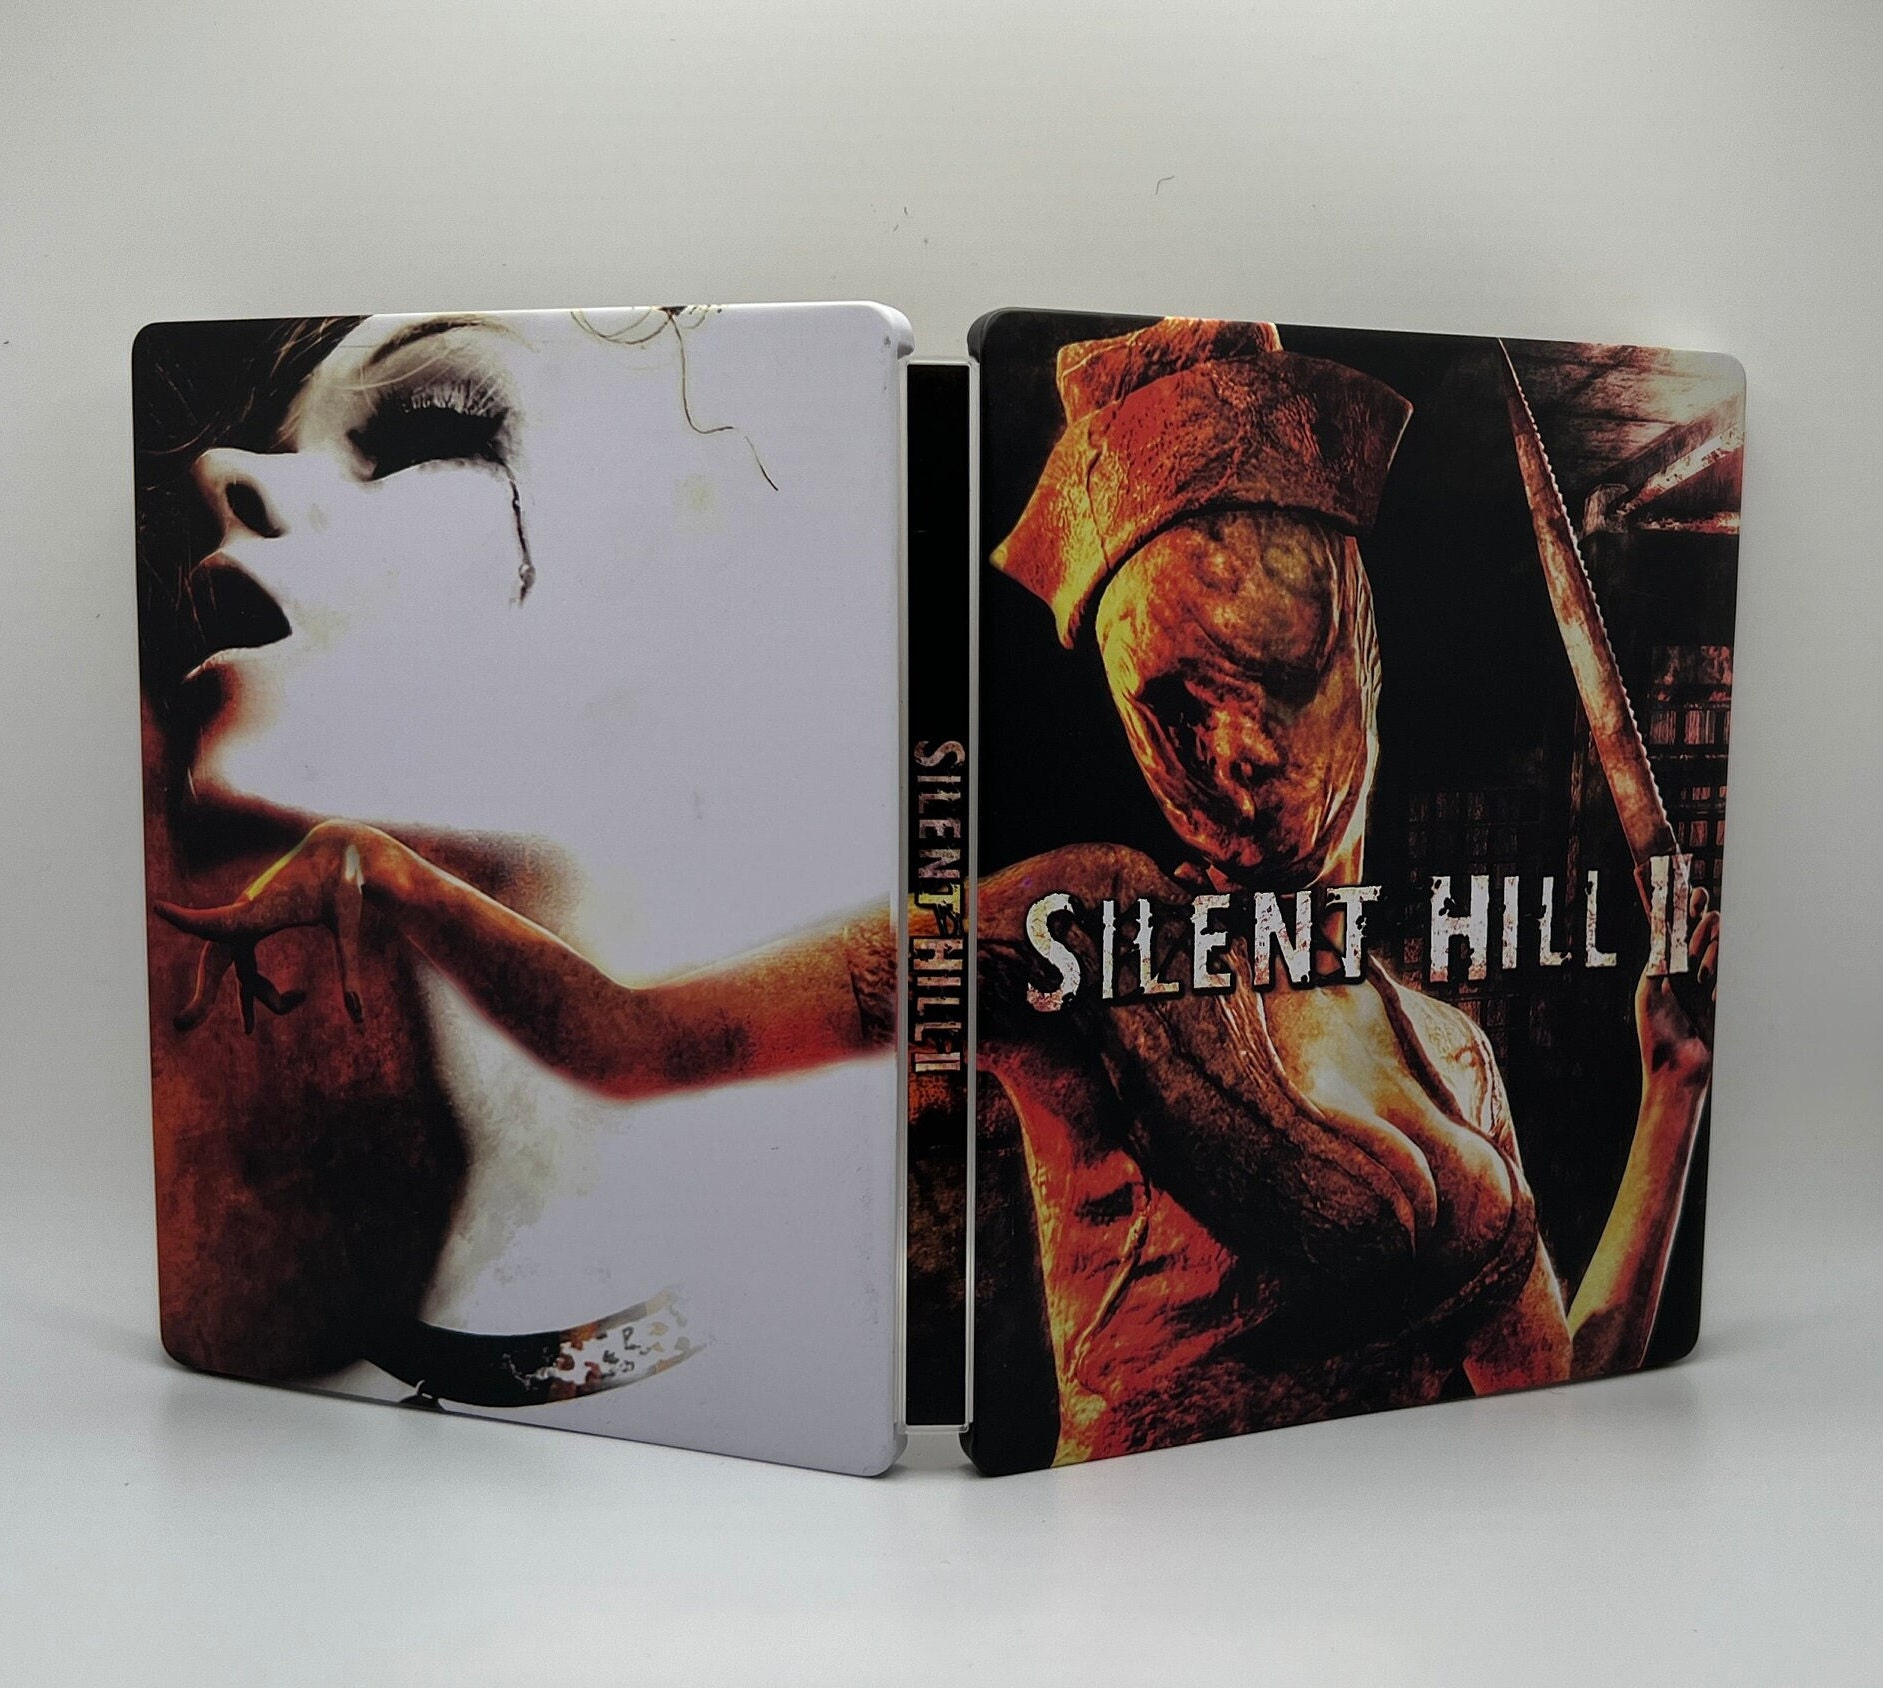 Silen Hill 2 Remake Imaginary Edition Steelbook